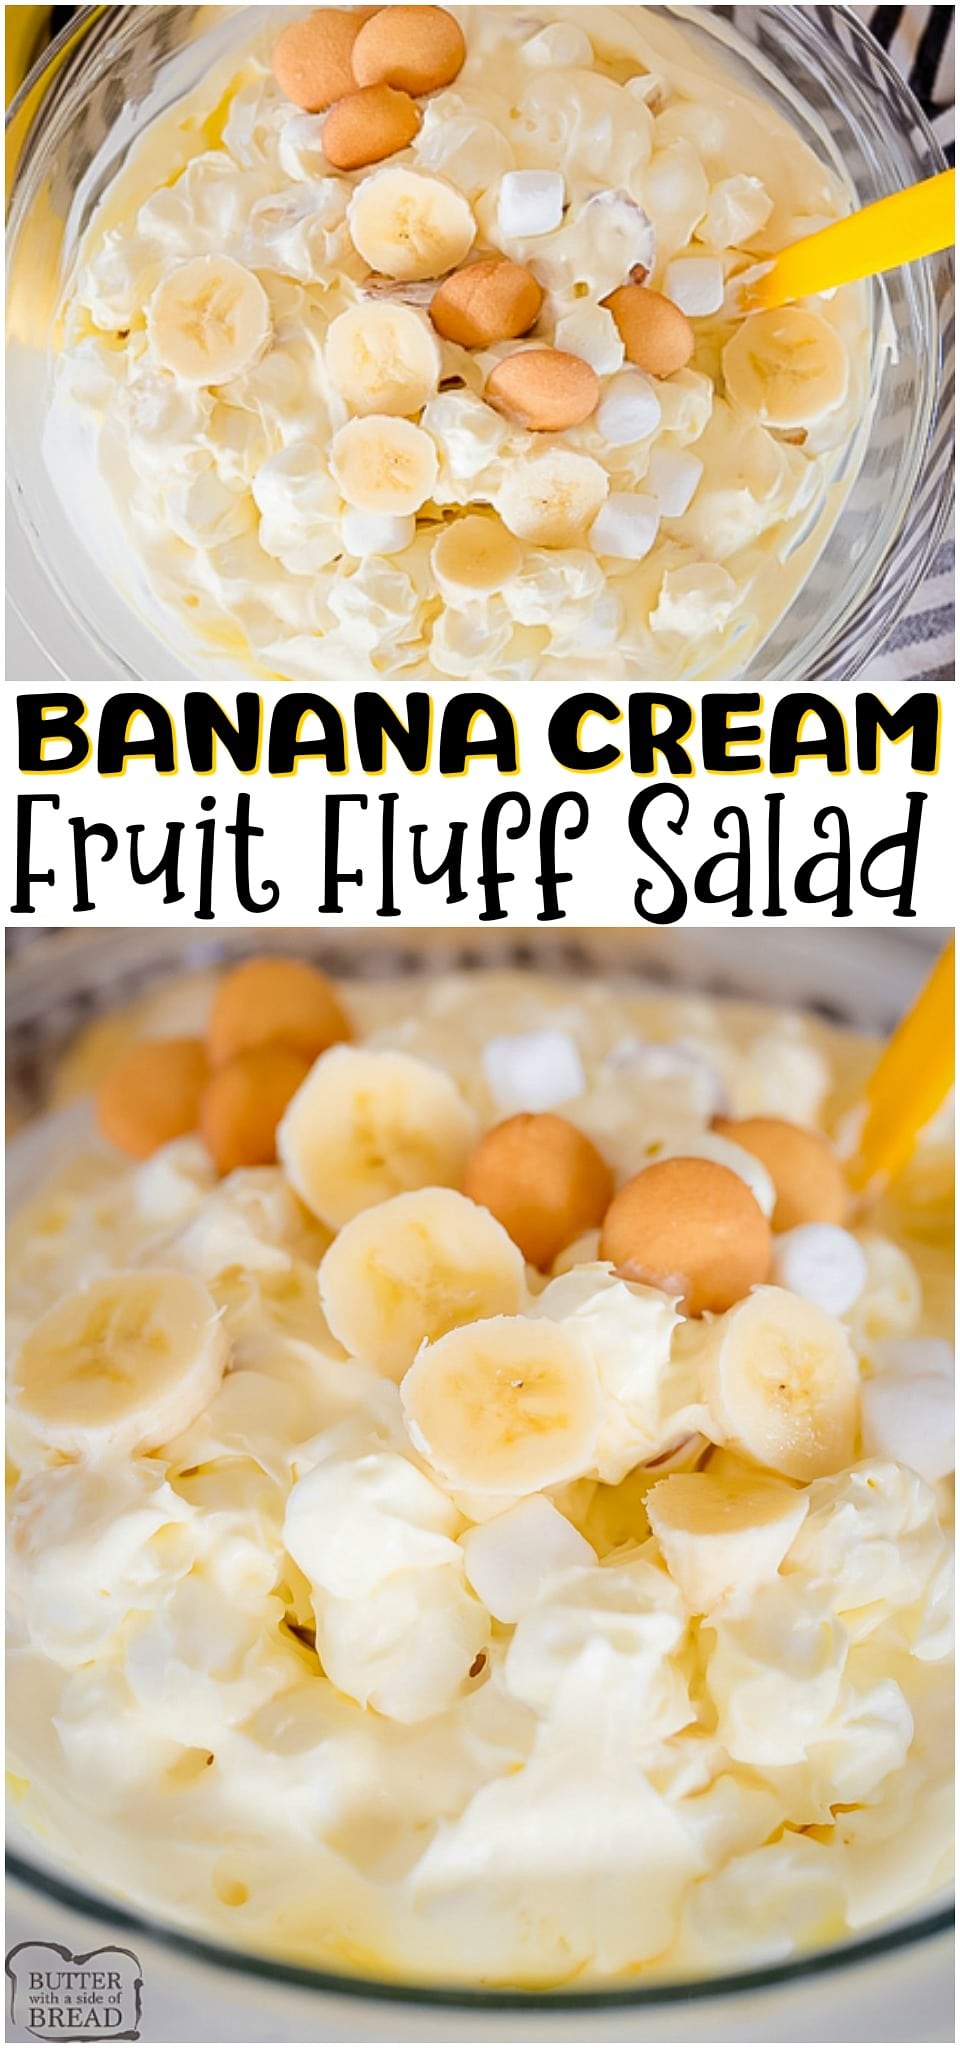 Banana Cream Fluff Salad made with bananas, yogurt, pudding mix and sweet cream. Perfect 10-minute sweet dessert salad for banana cream pie lovers!